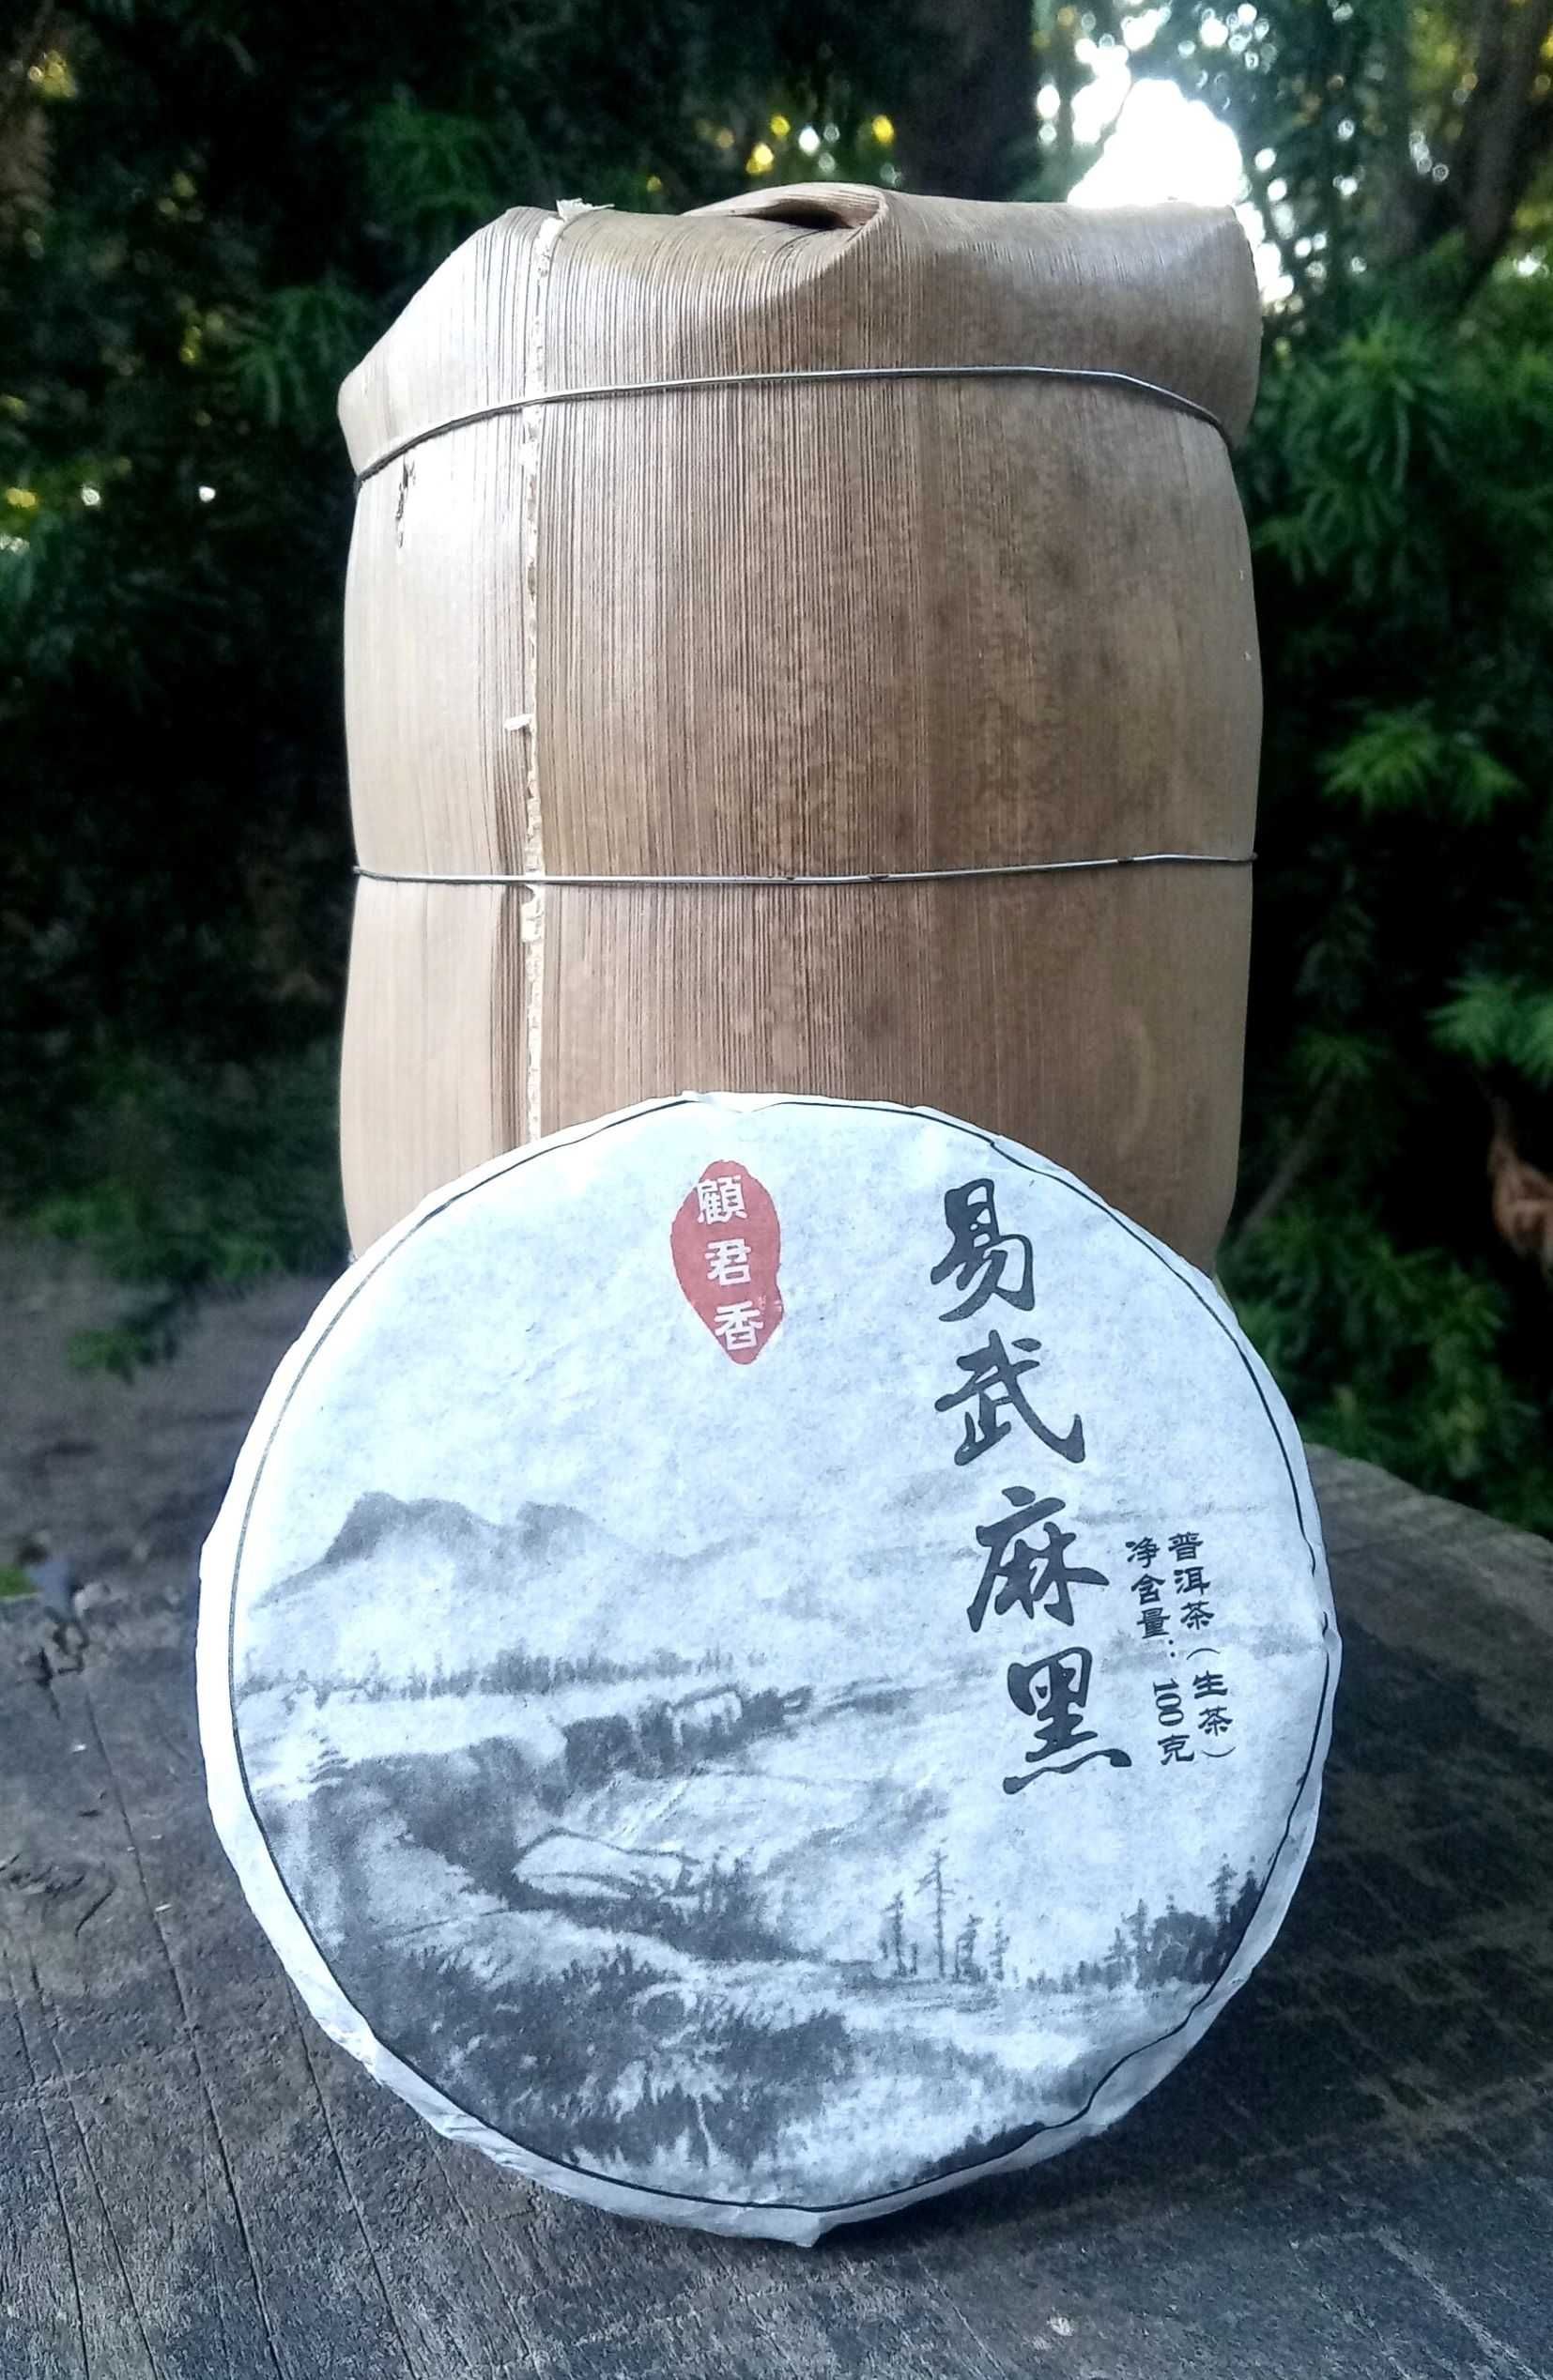 TEA Planet - Herbata PuErh Sheng prosto z Chin - dysk 100 g. z 2016 r.